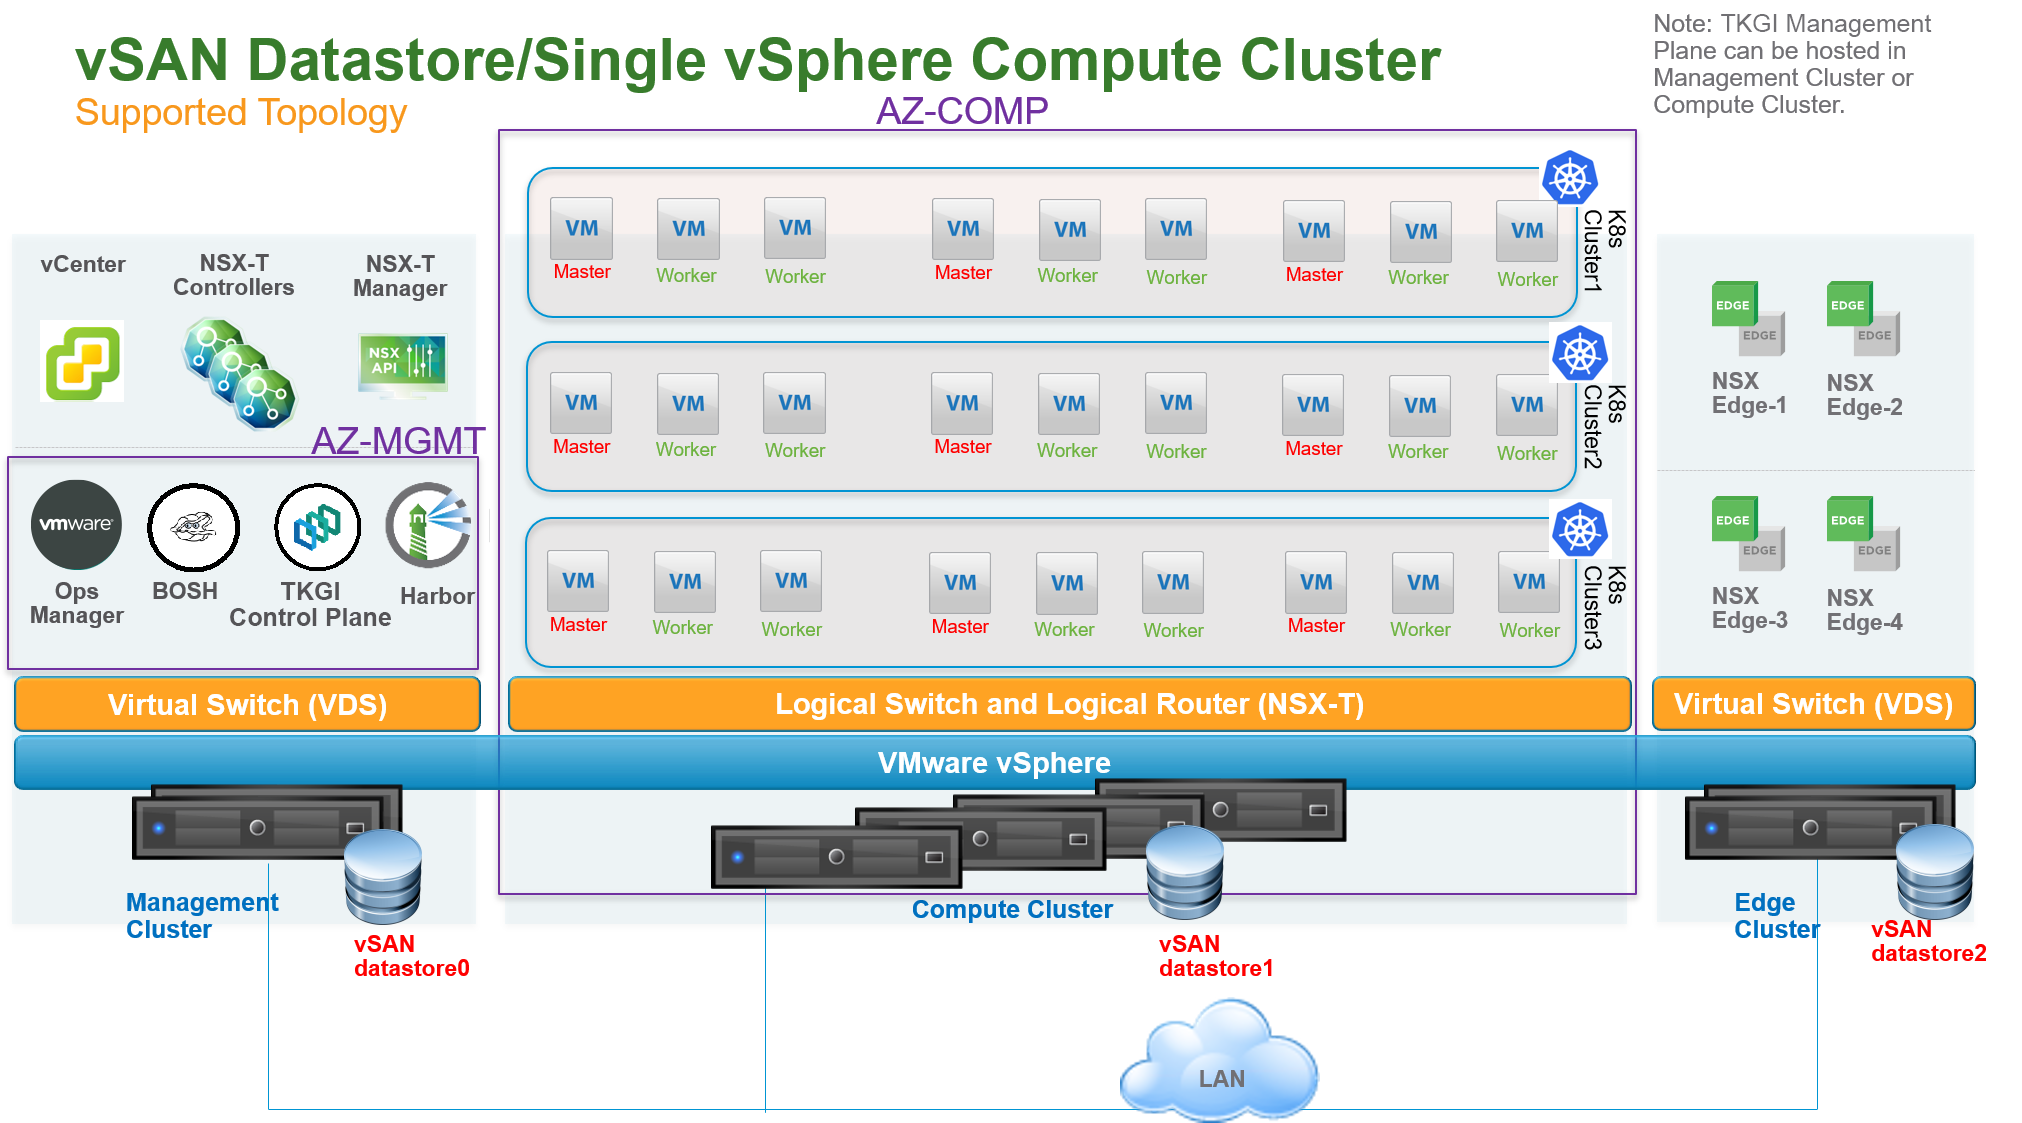 Single vSphere compute cluster with vSAN datastore